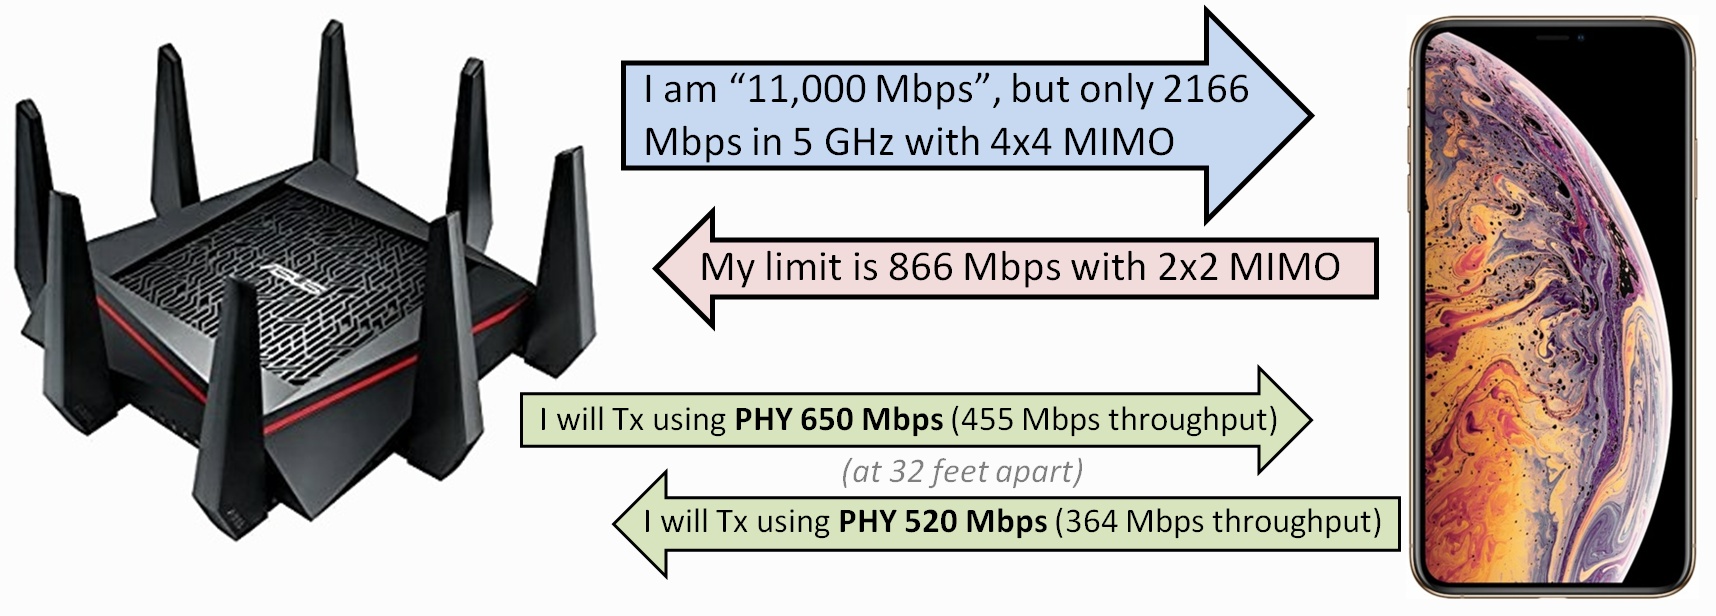 broadcom 802.11n network adapter update 5ghz